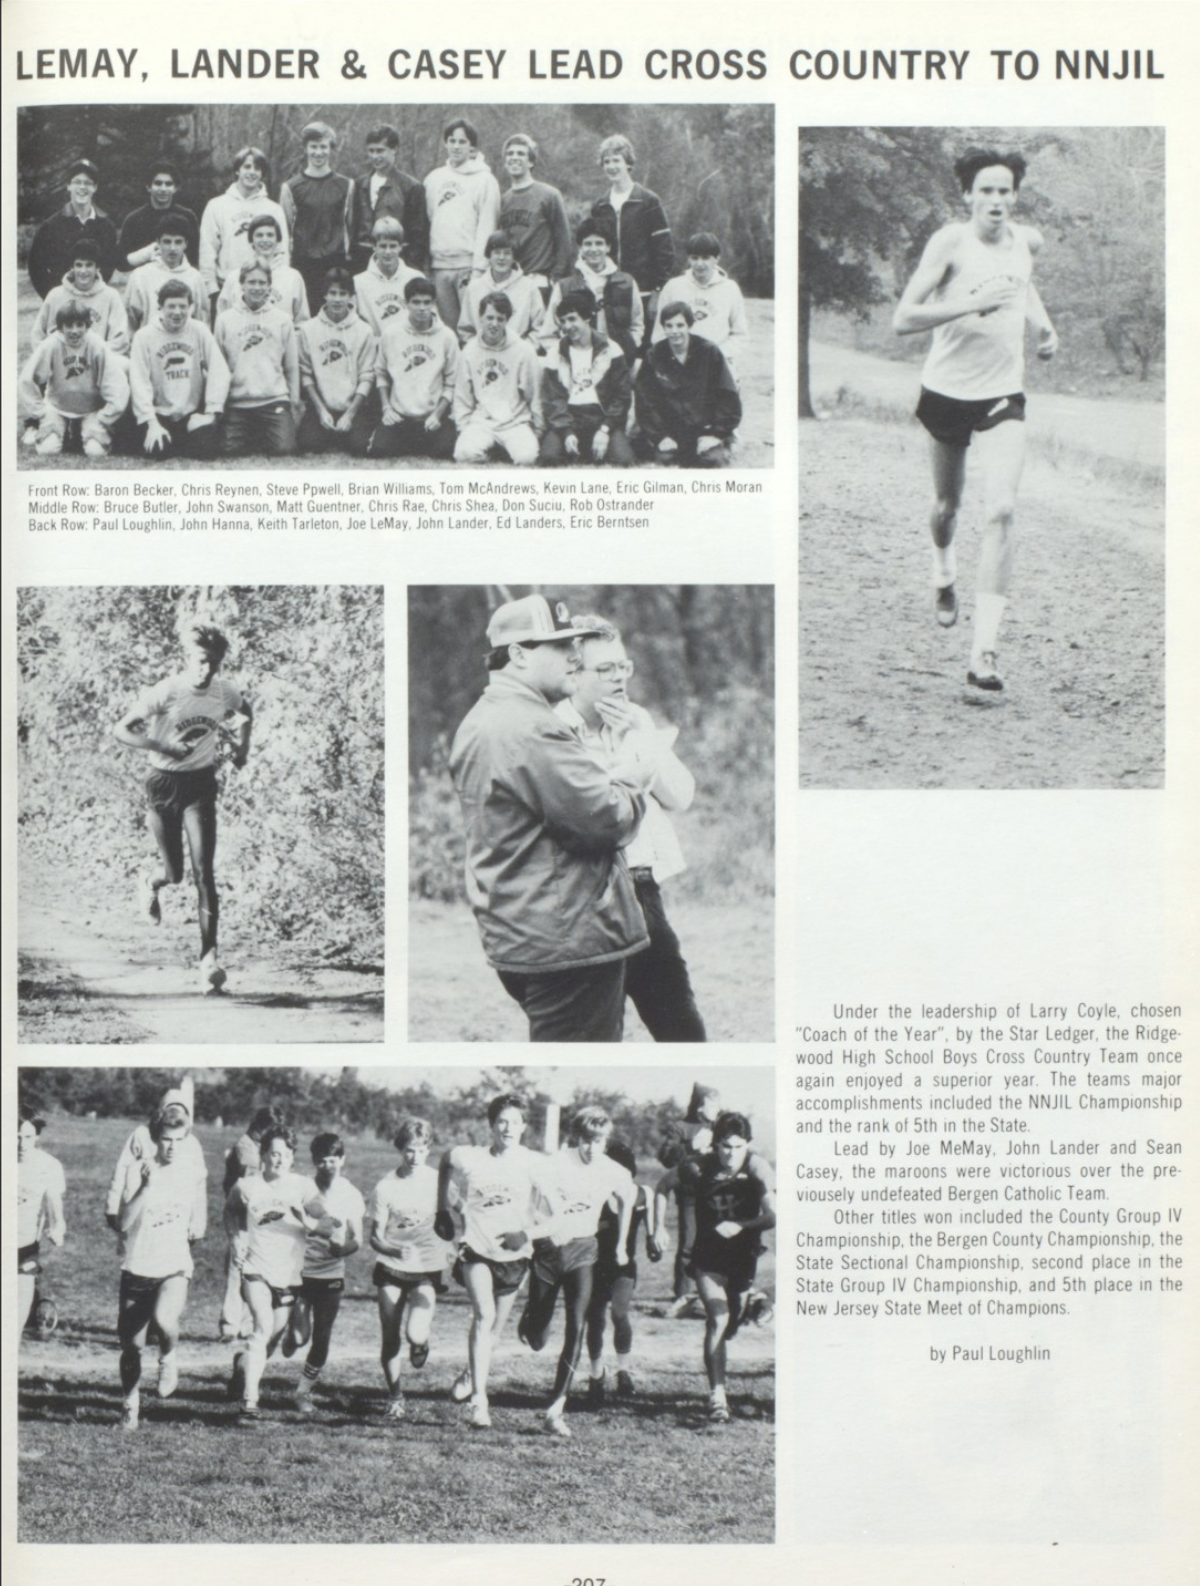 1984 Boys’ Cross Country Team